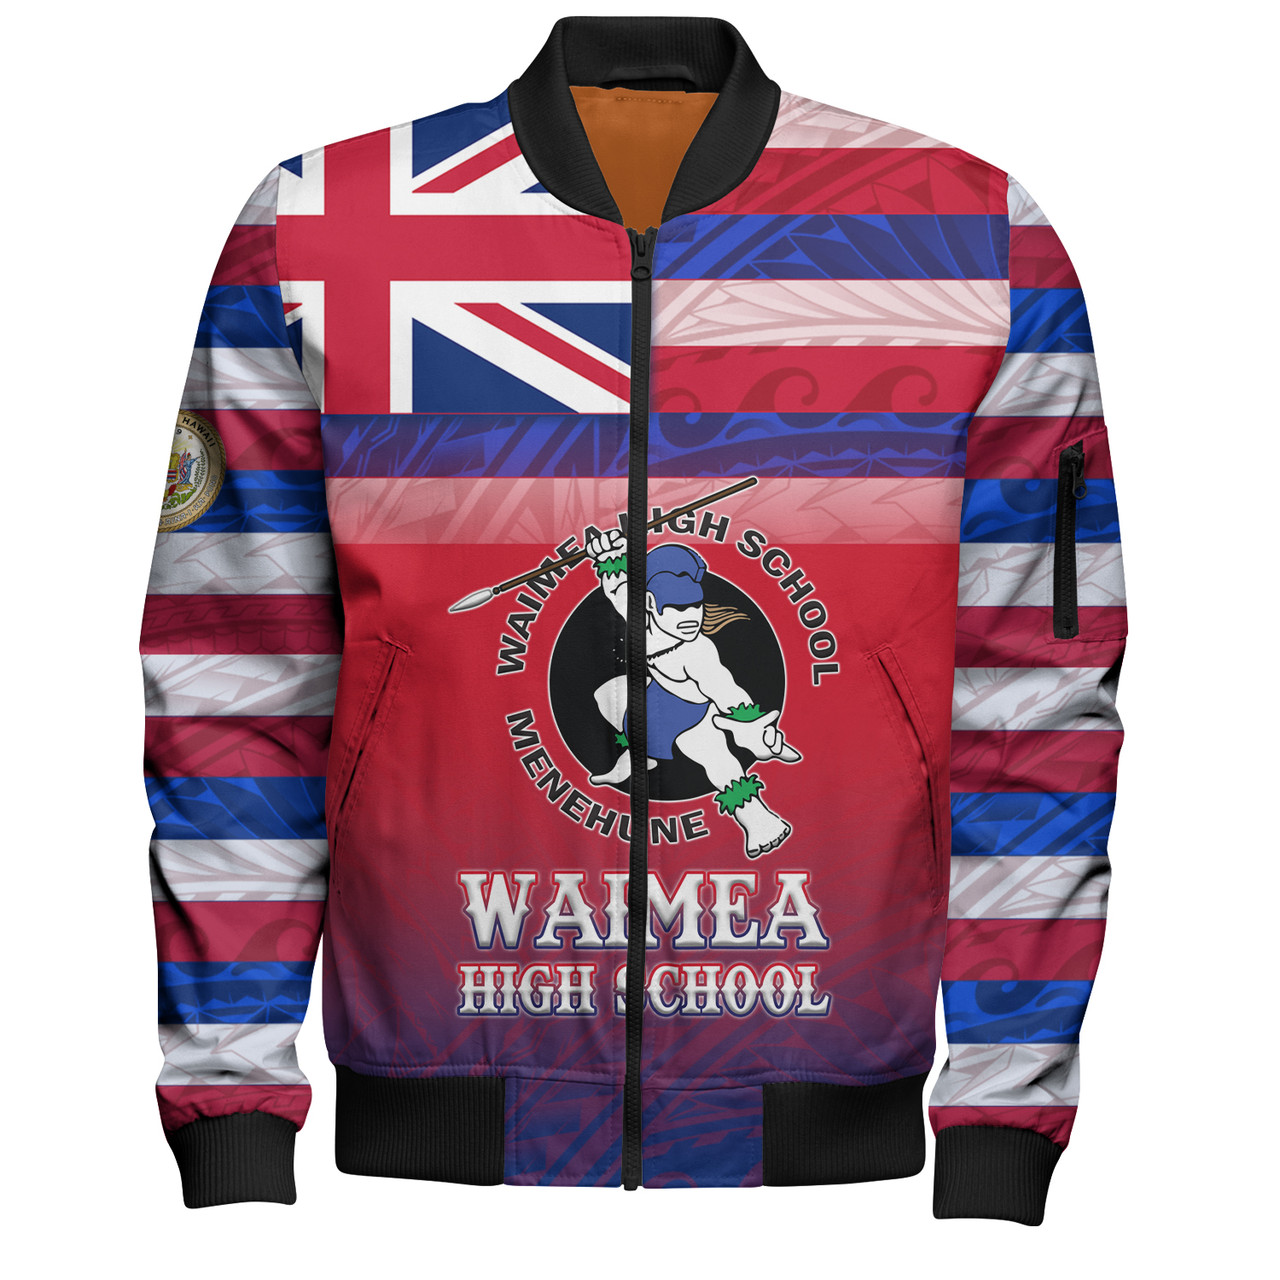 Hawaii Waimea High School Bomber Jacket Flag Color With Traditional Patterns